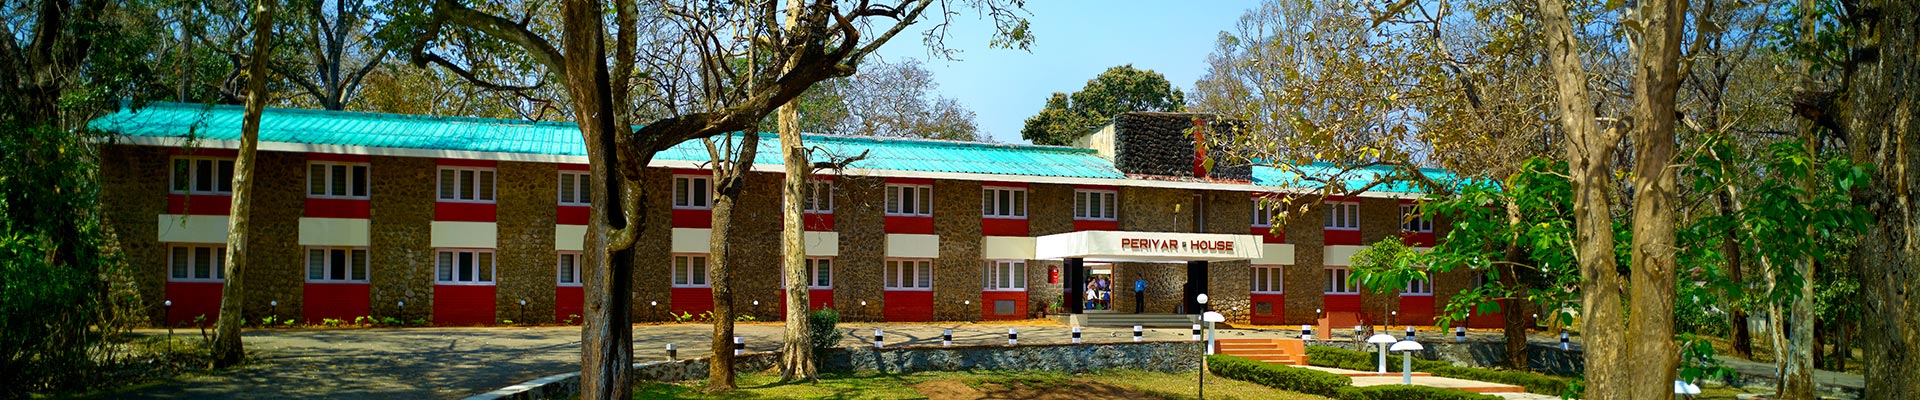 Periyar House